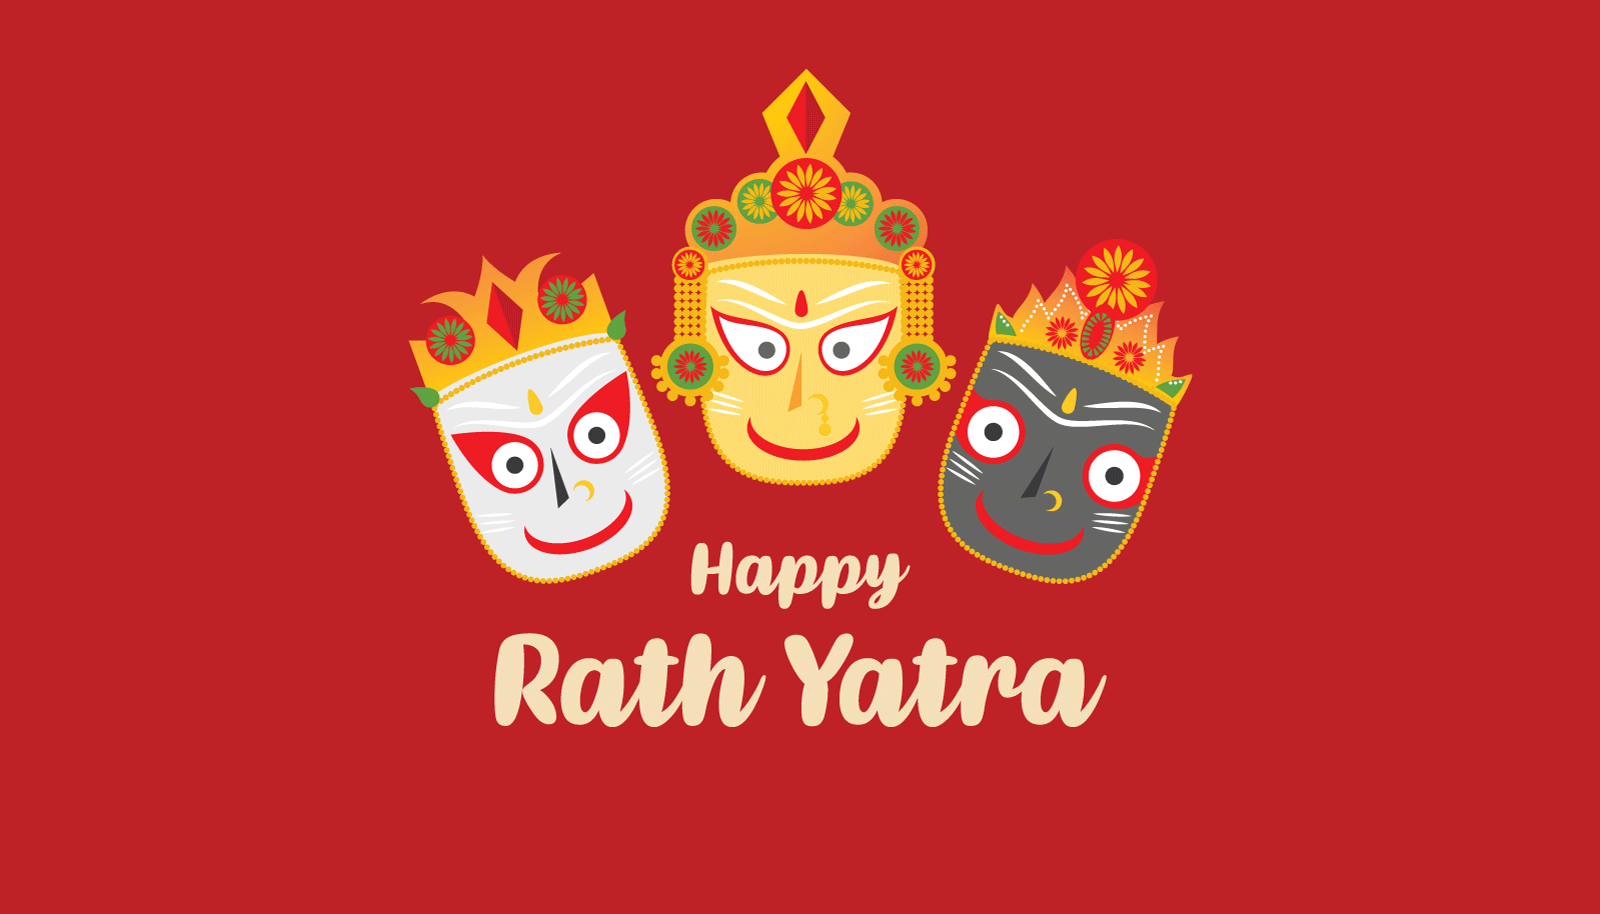 Rath Yatra Indian Festival background template vector illustration flat design